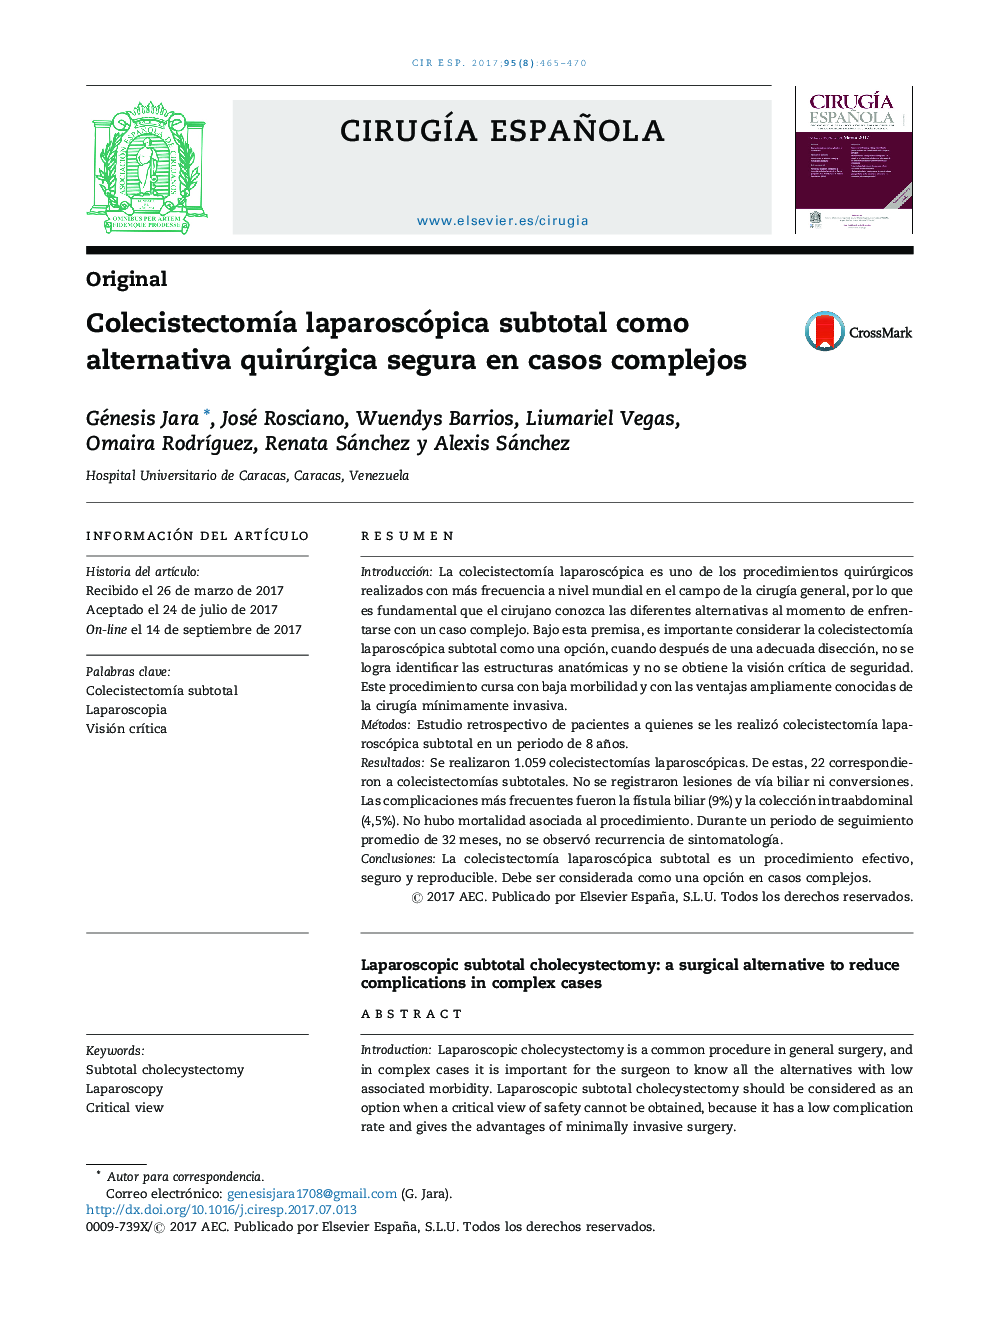 ColecistectomÃ­a laparoscópica subtotal como alternativa quirúrgica segura en casos complejos